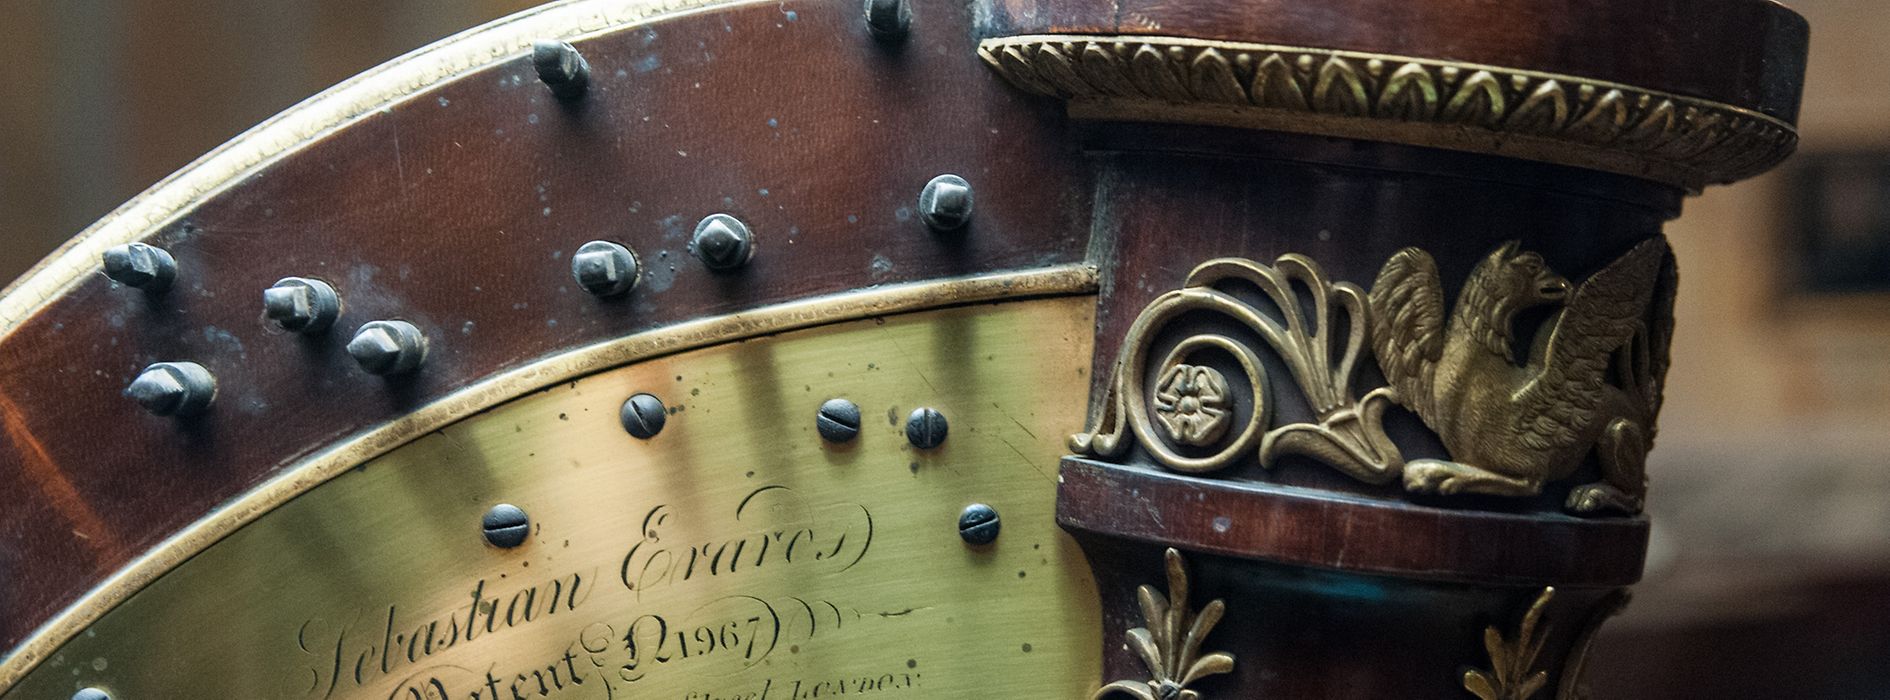 Sammlung alter Musikinstrumente, close-up harp - collection of old musical instruments